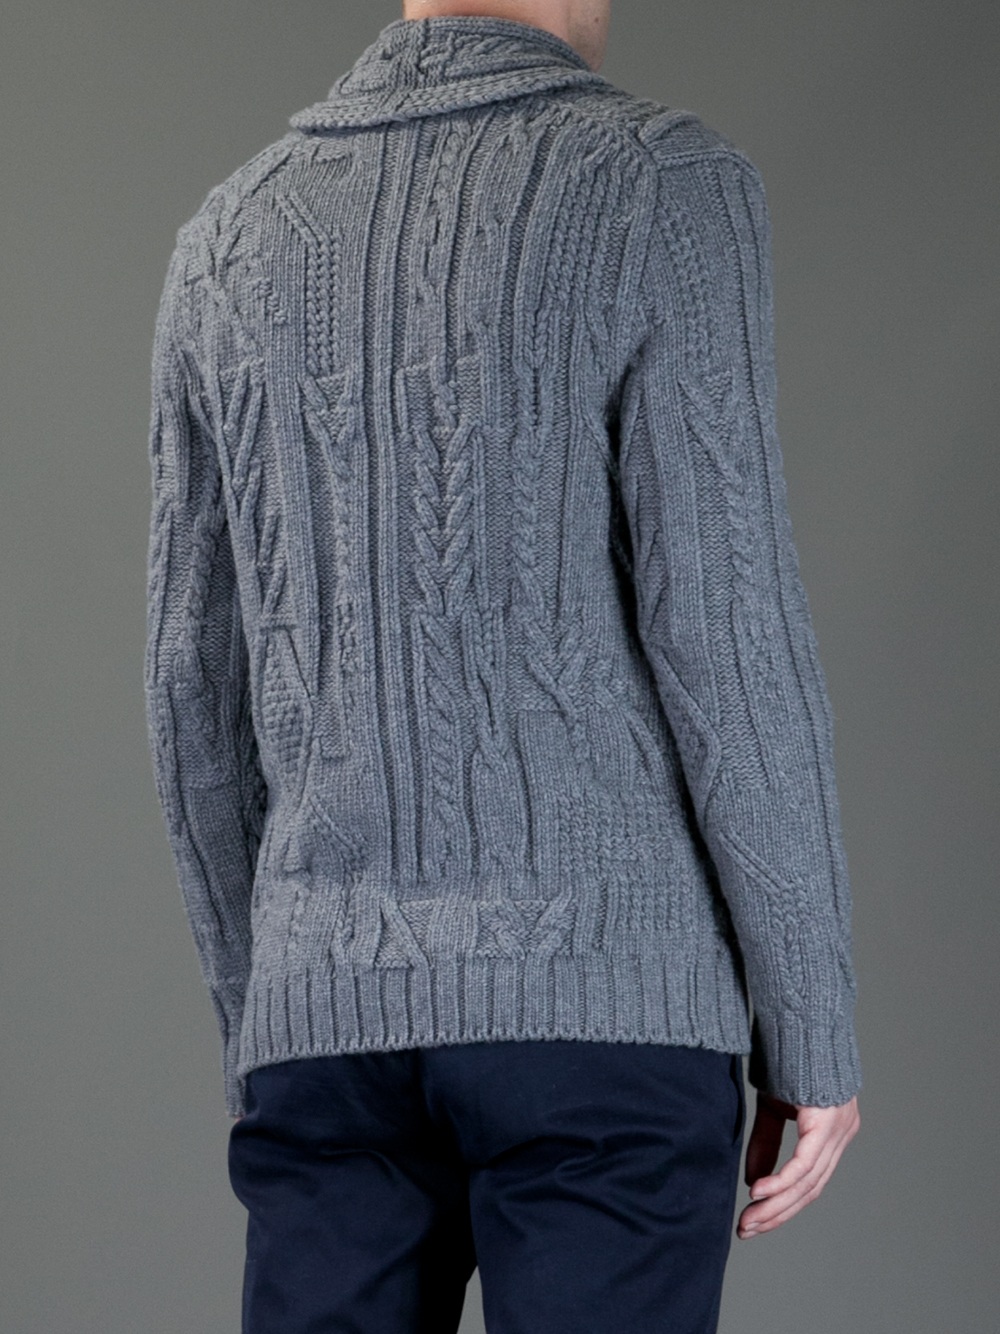 Lyst - Woolrich Fair Isle Knit Cardigan in Gray for Men